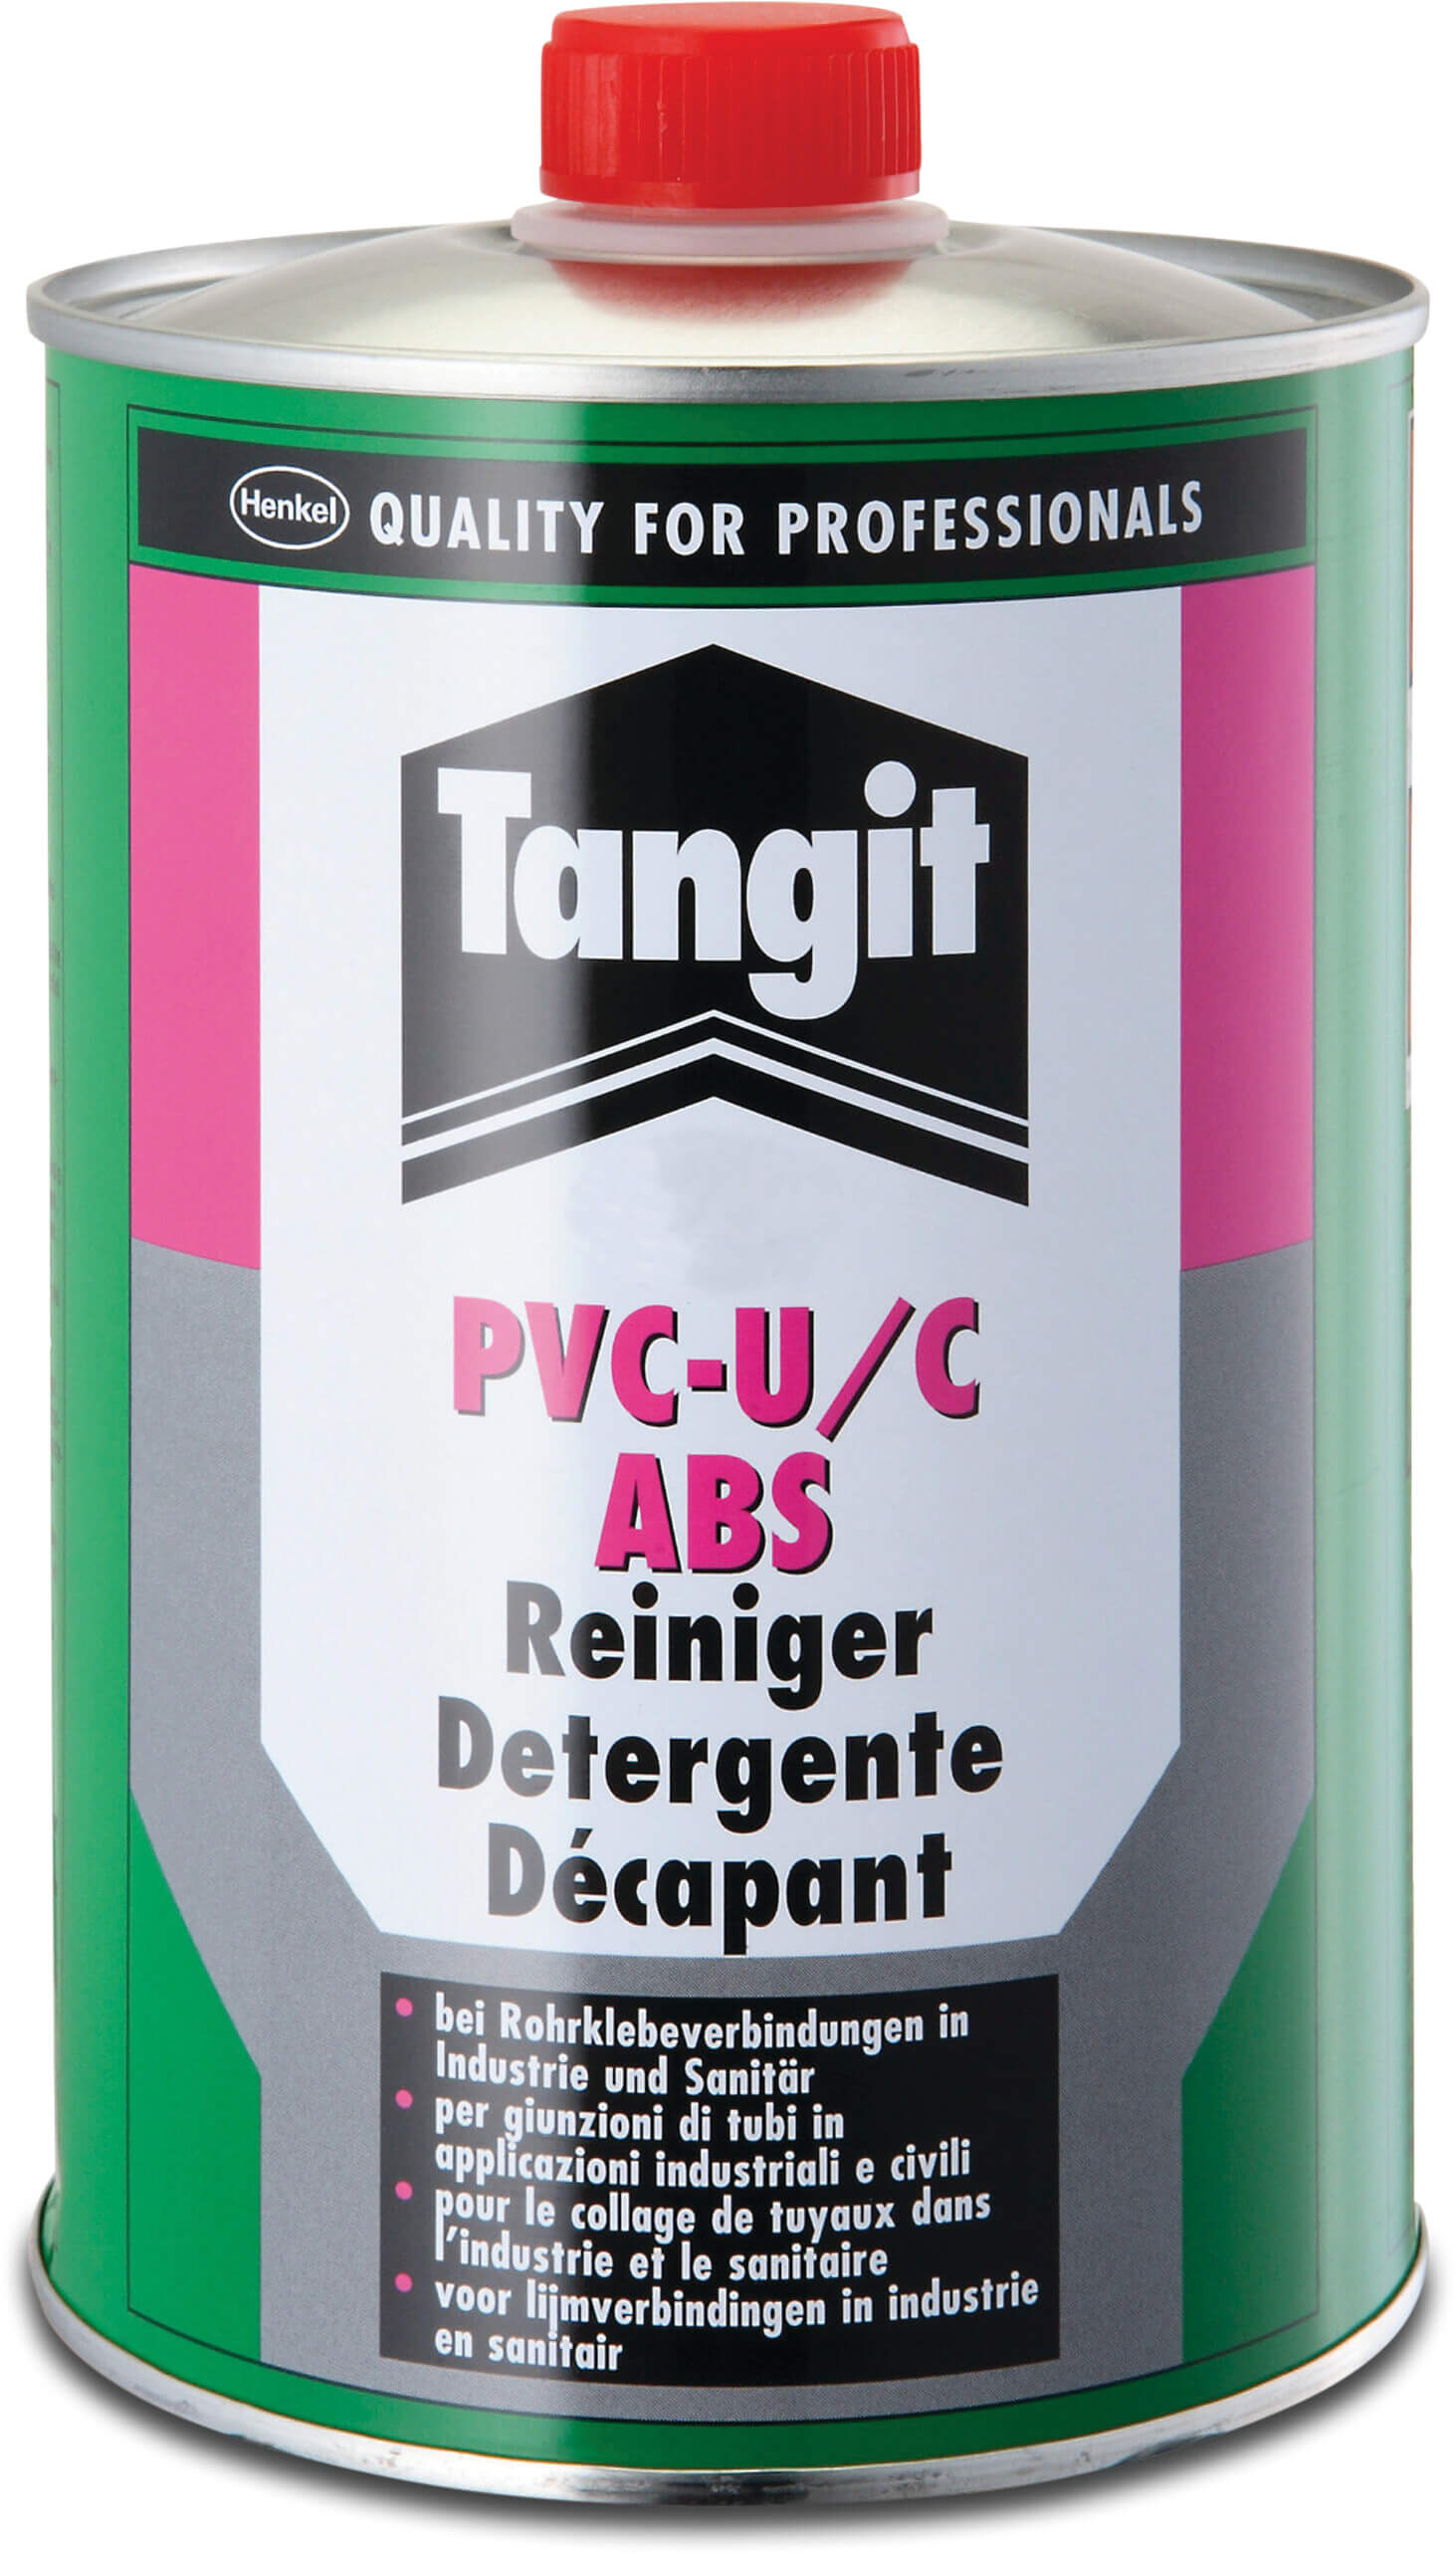 Tangit Reiniger 1ltr type PVC-U/C ABS Label EN/DE/NL/FR/IT